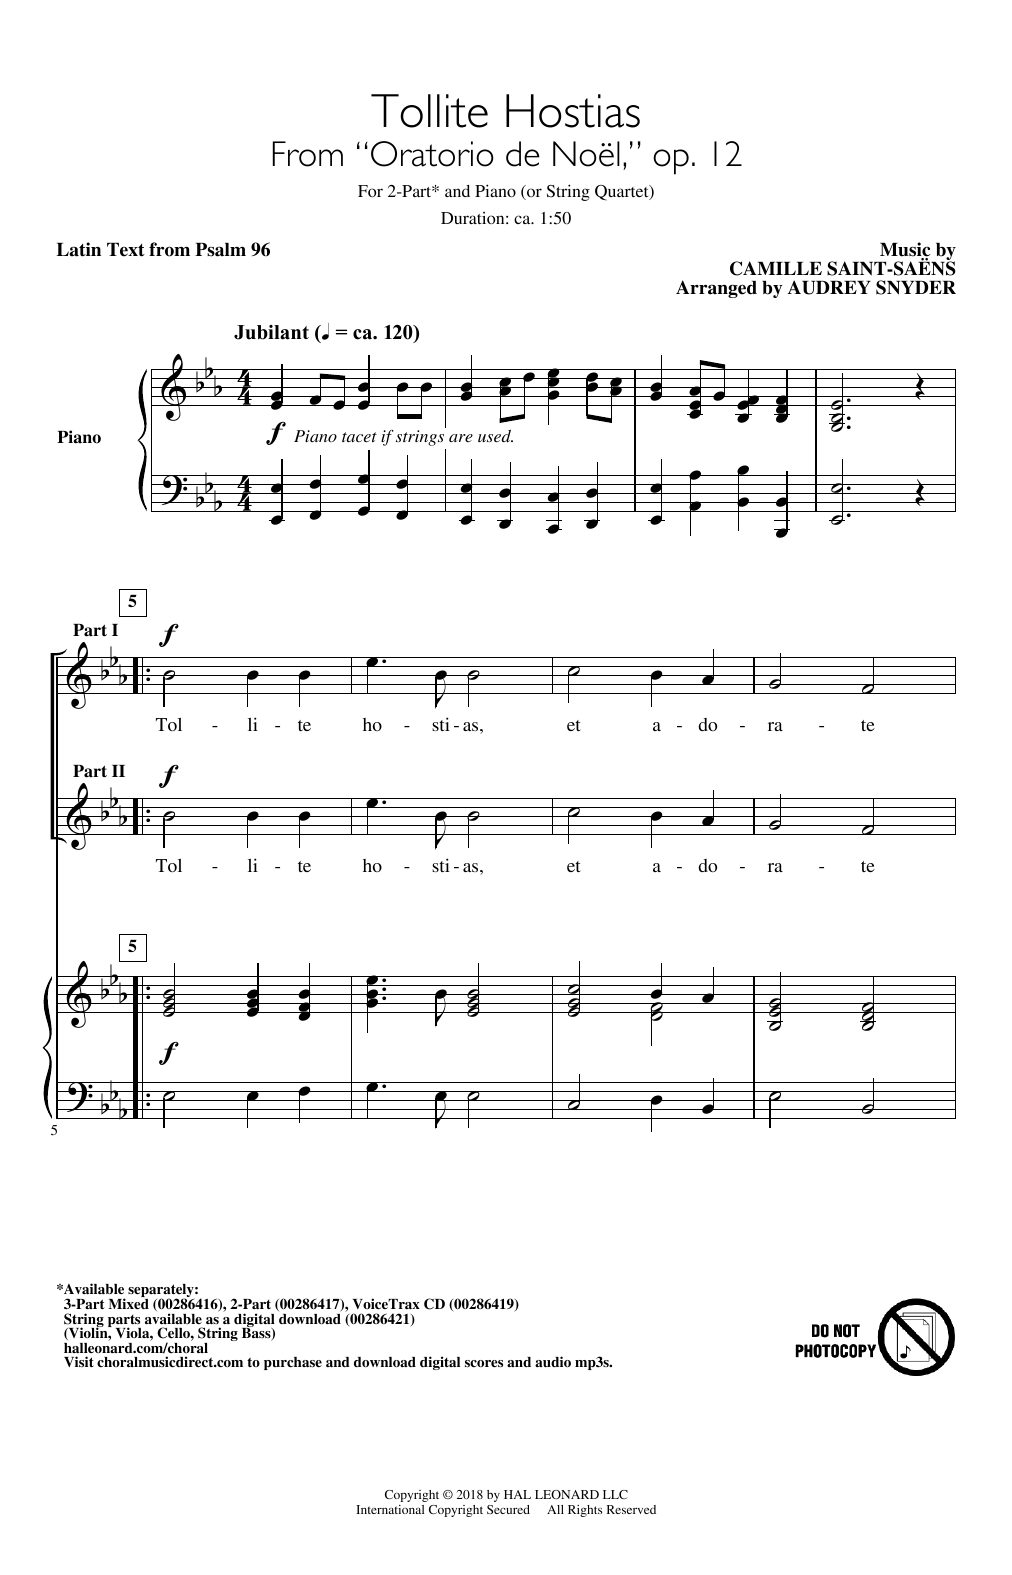 Camille Saint-Saens Tollite Hostias (arr. Audrey Snyder) Sheet Music Notes & Chords for 3-Part Mixed Choir - Download or Print PDF